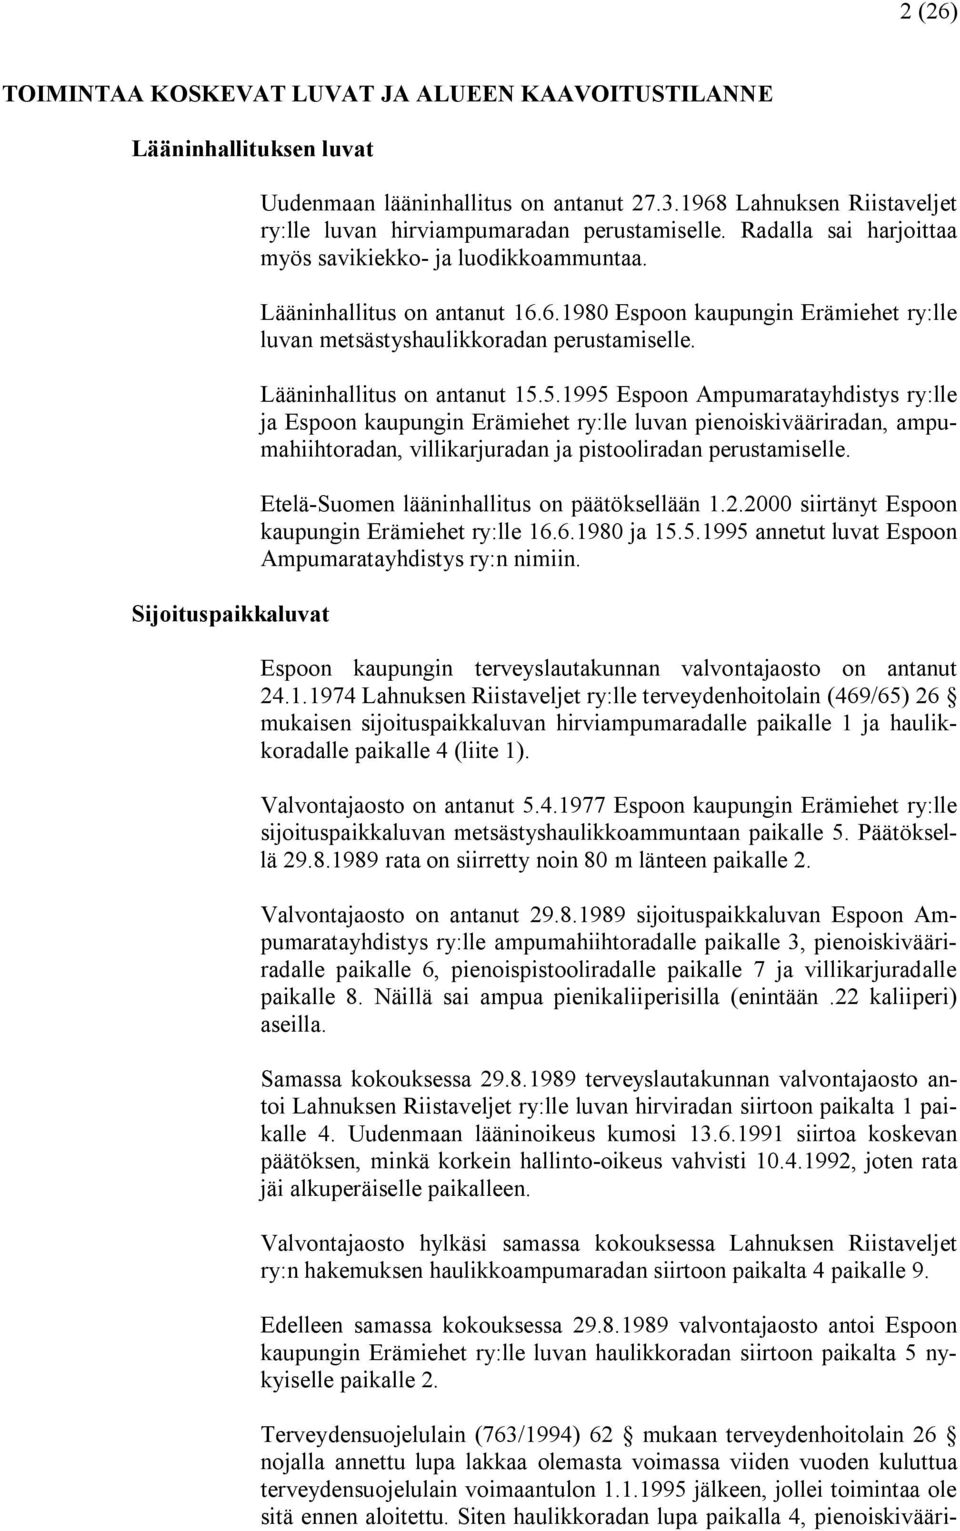 Lääninhallitus on antanut 15.5.1995 Espoon Ampumaratayhdistys ry:lle ja Espoon kaupungin Erämiehet ry:lle luvan pienoiskivääriradan, ampumahiihtoradan, villikarjuradan ja pistooliradan perustamiselle.